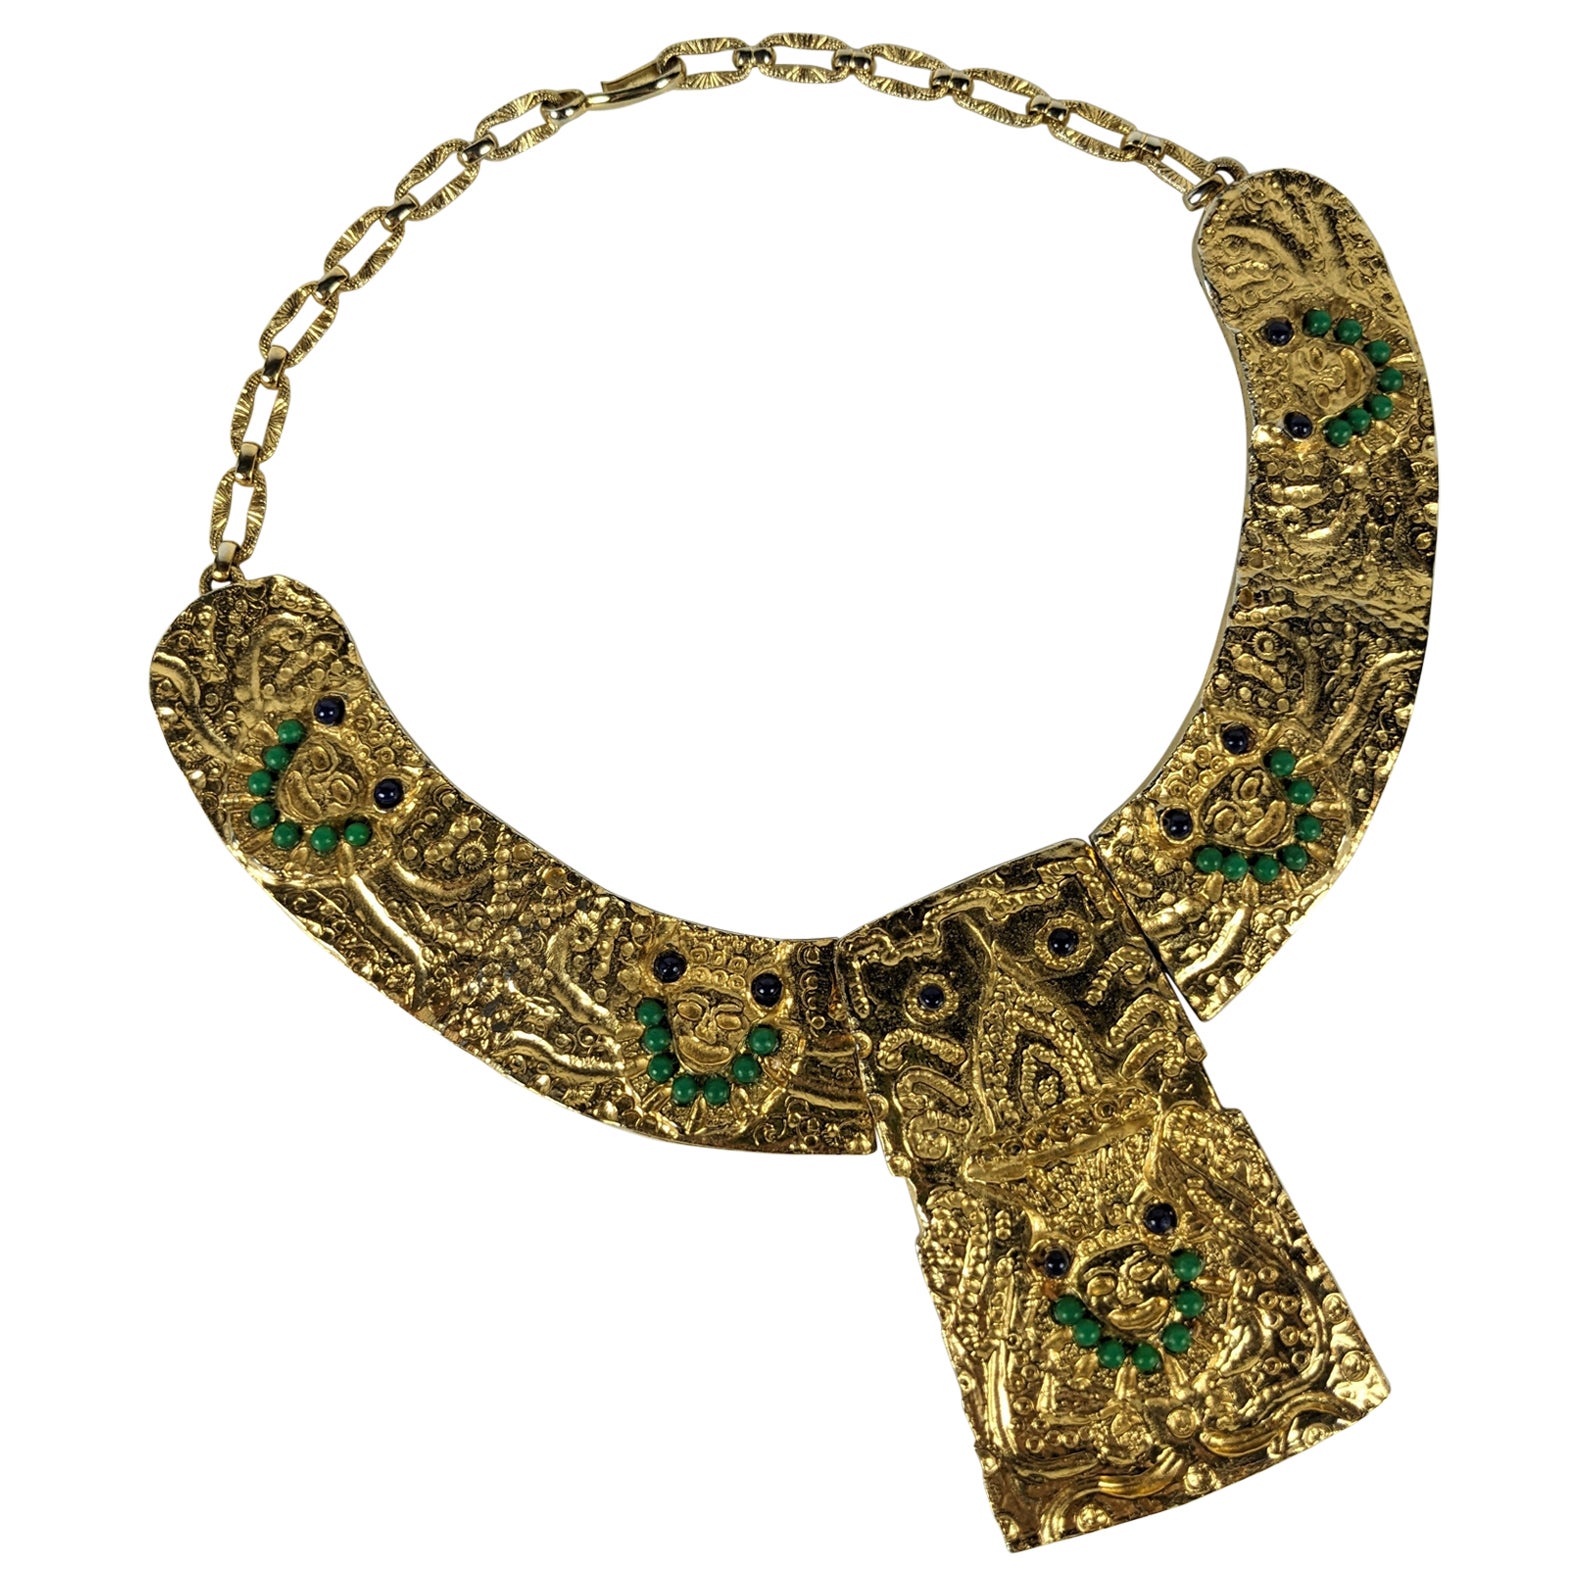 1960er Jahre Vergoldetes Halsband, Pre-Columbian Designs